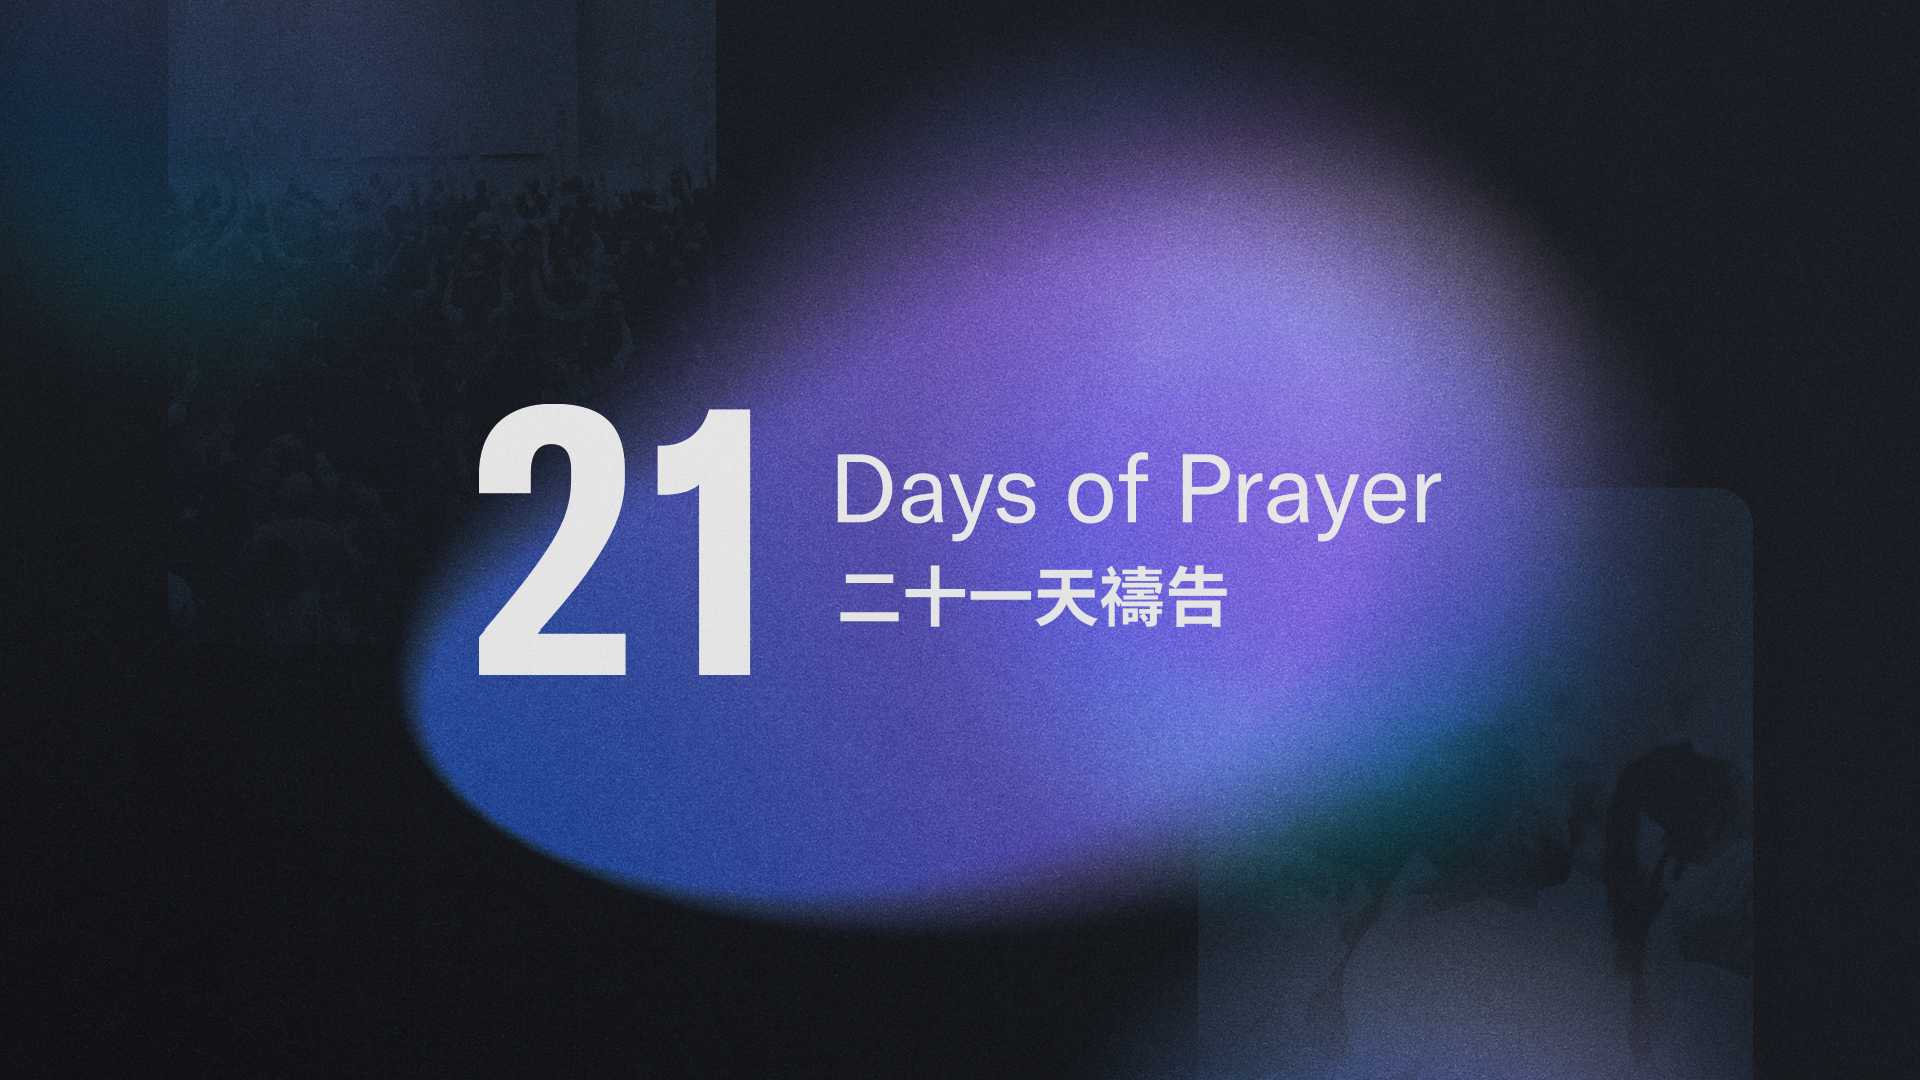 21 days of prayer - title (web)